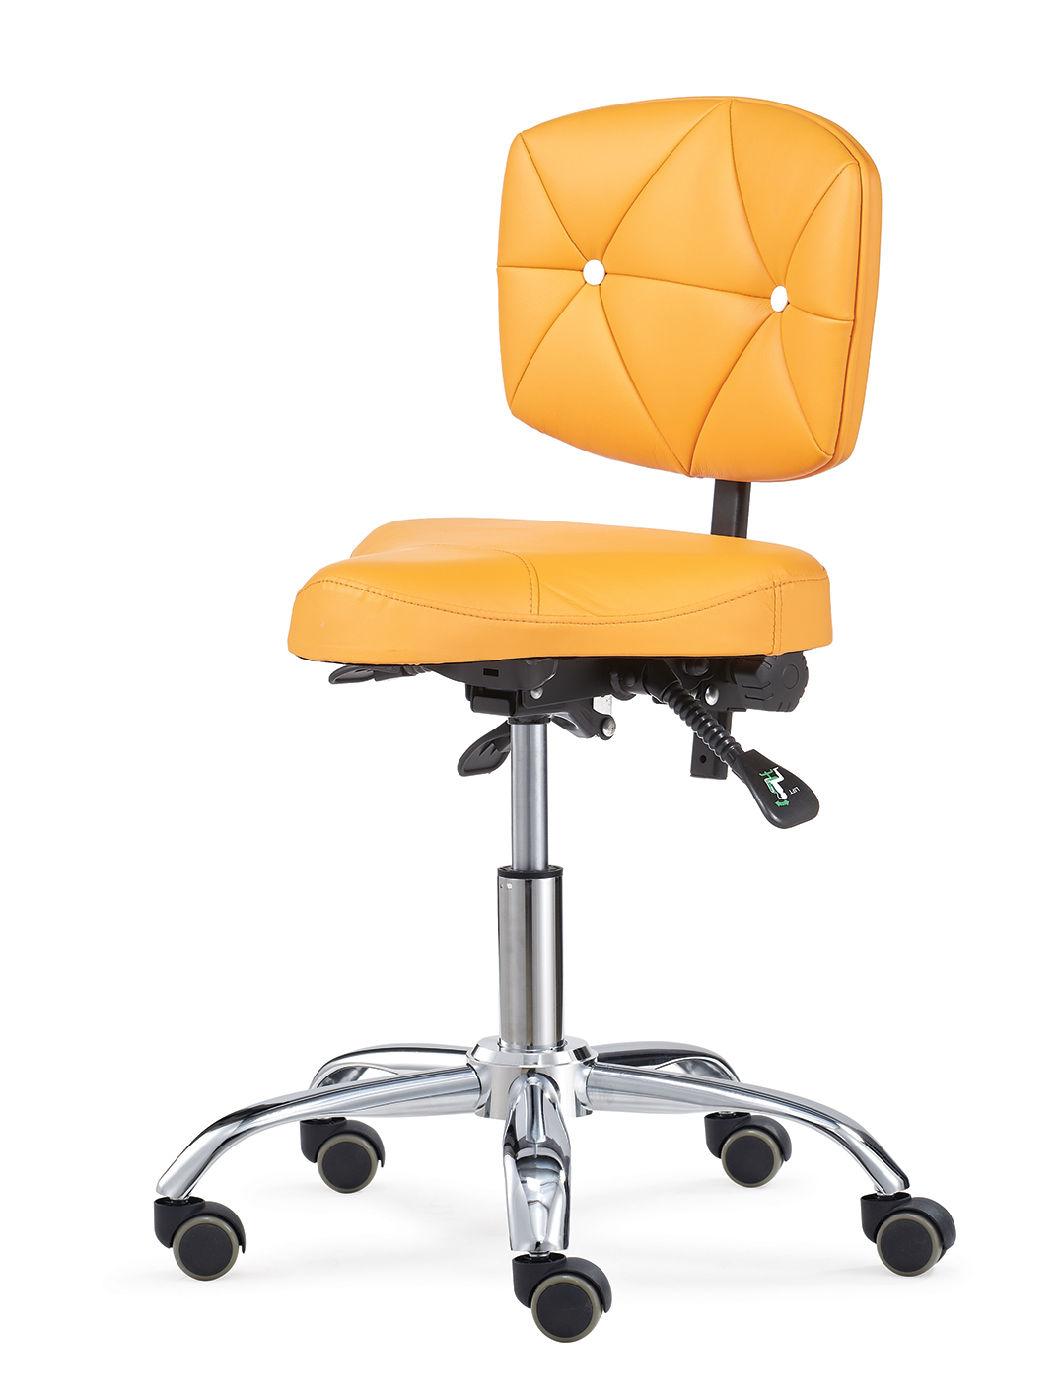 New Modern Top Selling Dental Chair Ergonomic Doctor Medical Chair